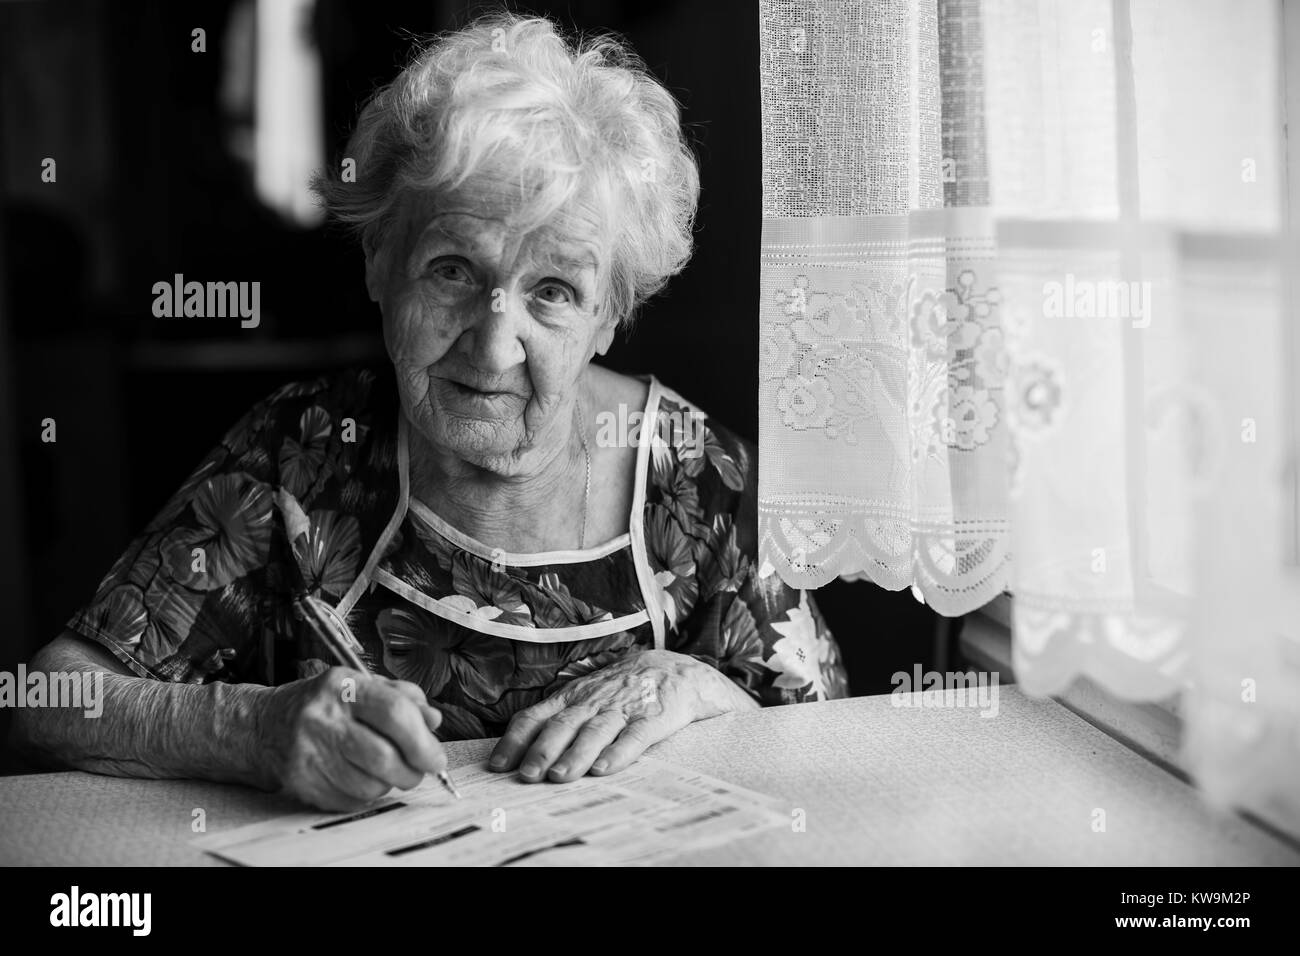 An elderly woman fills a receipt for payment of utility bills. Stock Photo